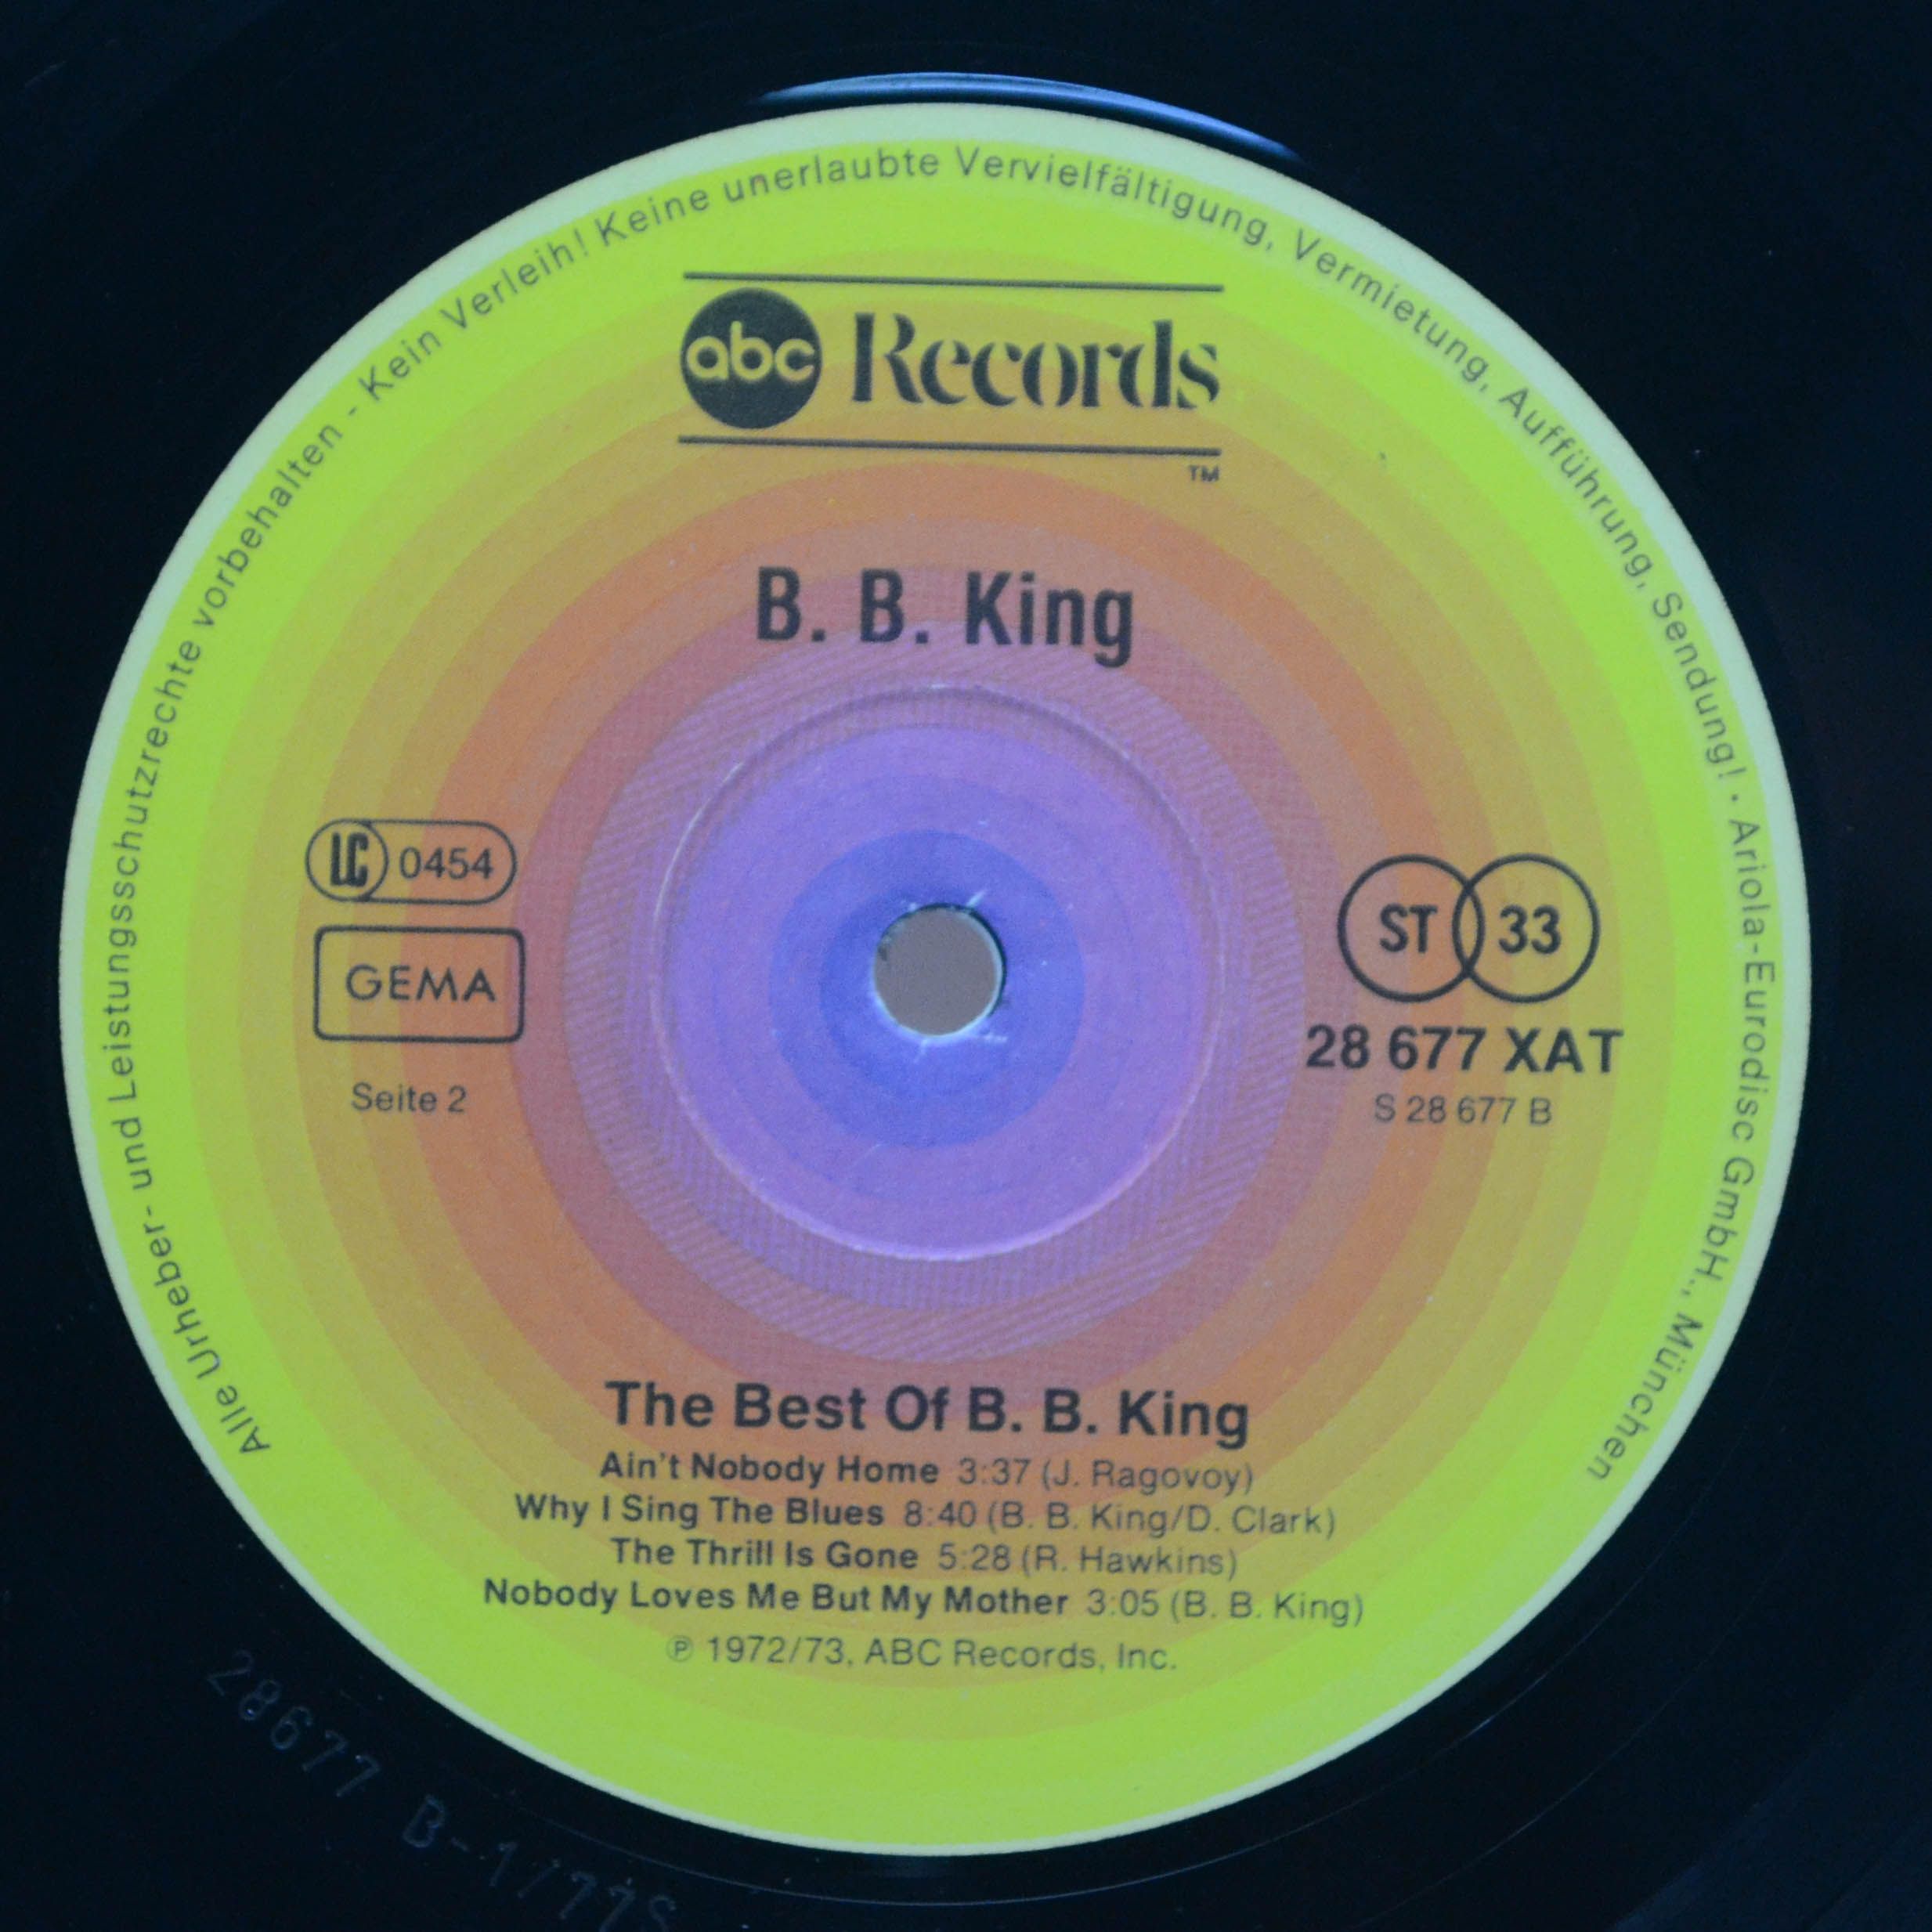 B.B. King — The Best Of B. B. King, 1973